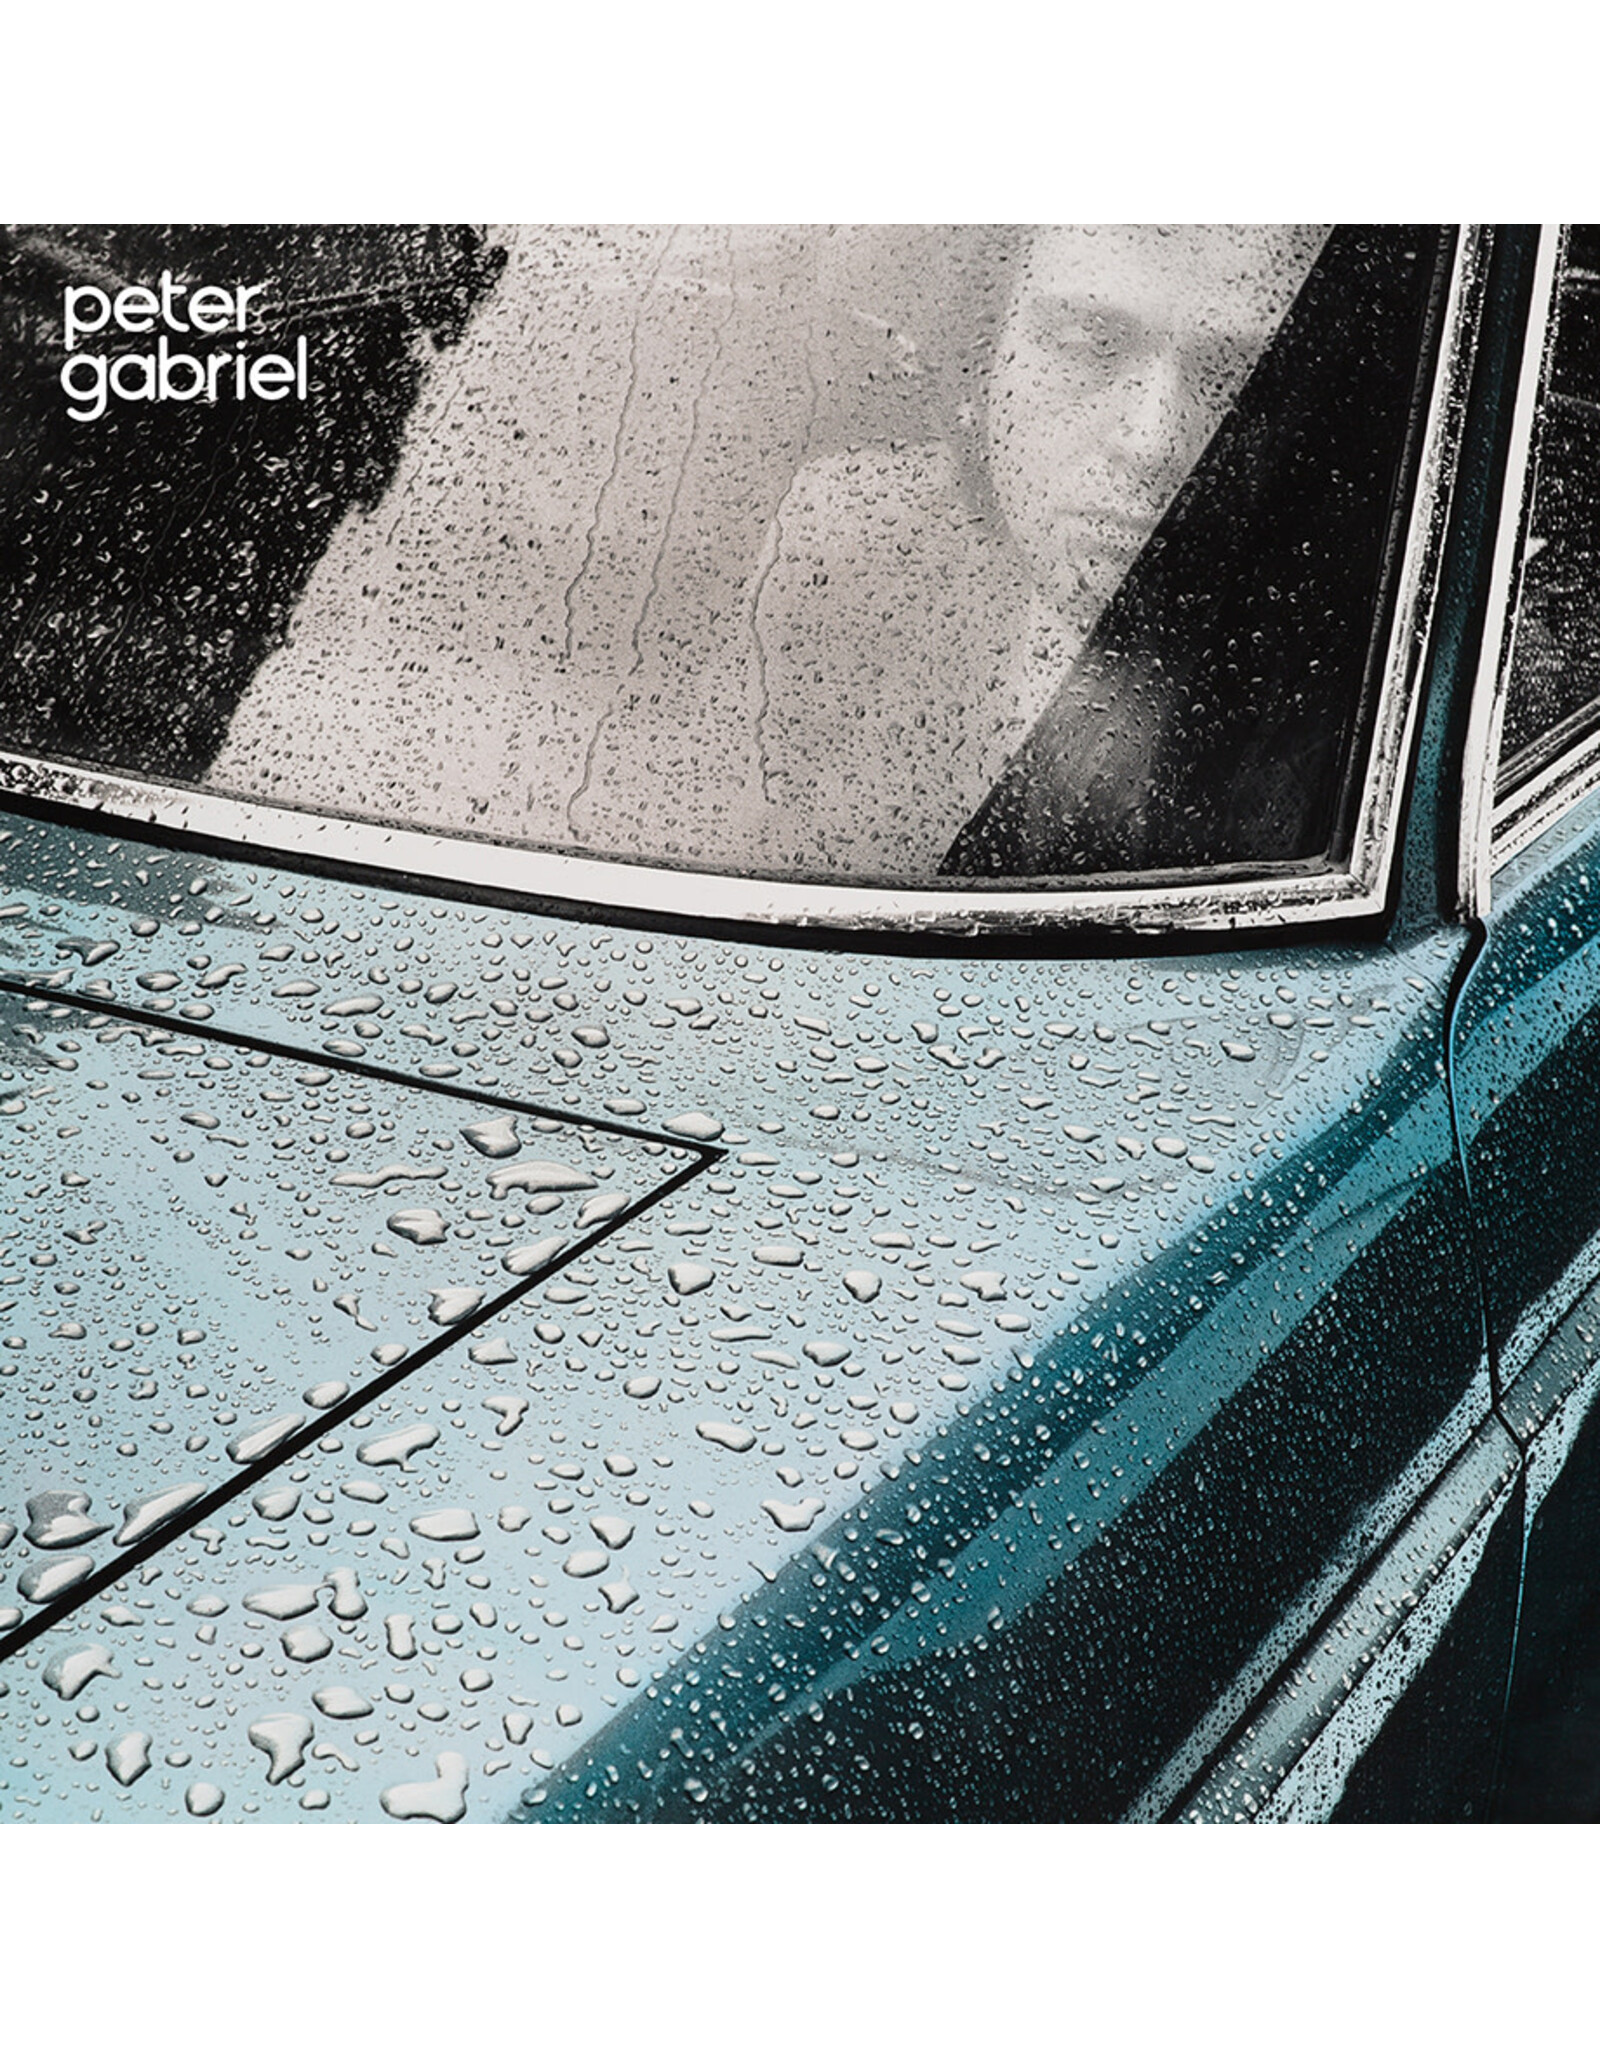 Peter Gabriel - Peter Gabriel 1 (Half-Speed Master)